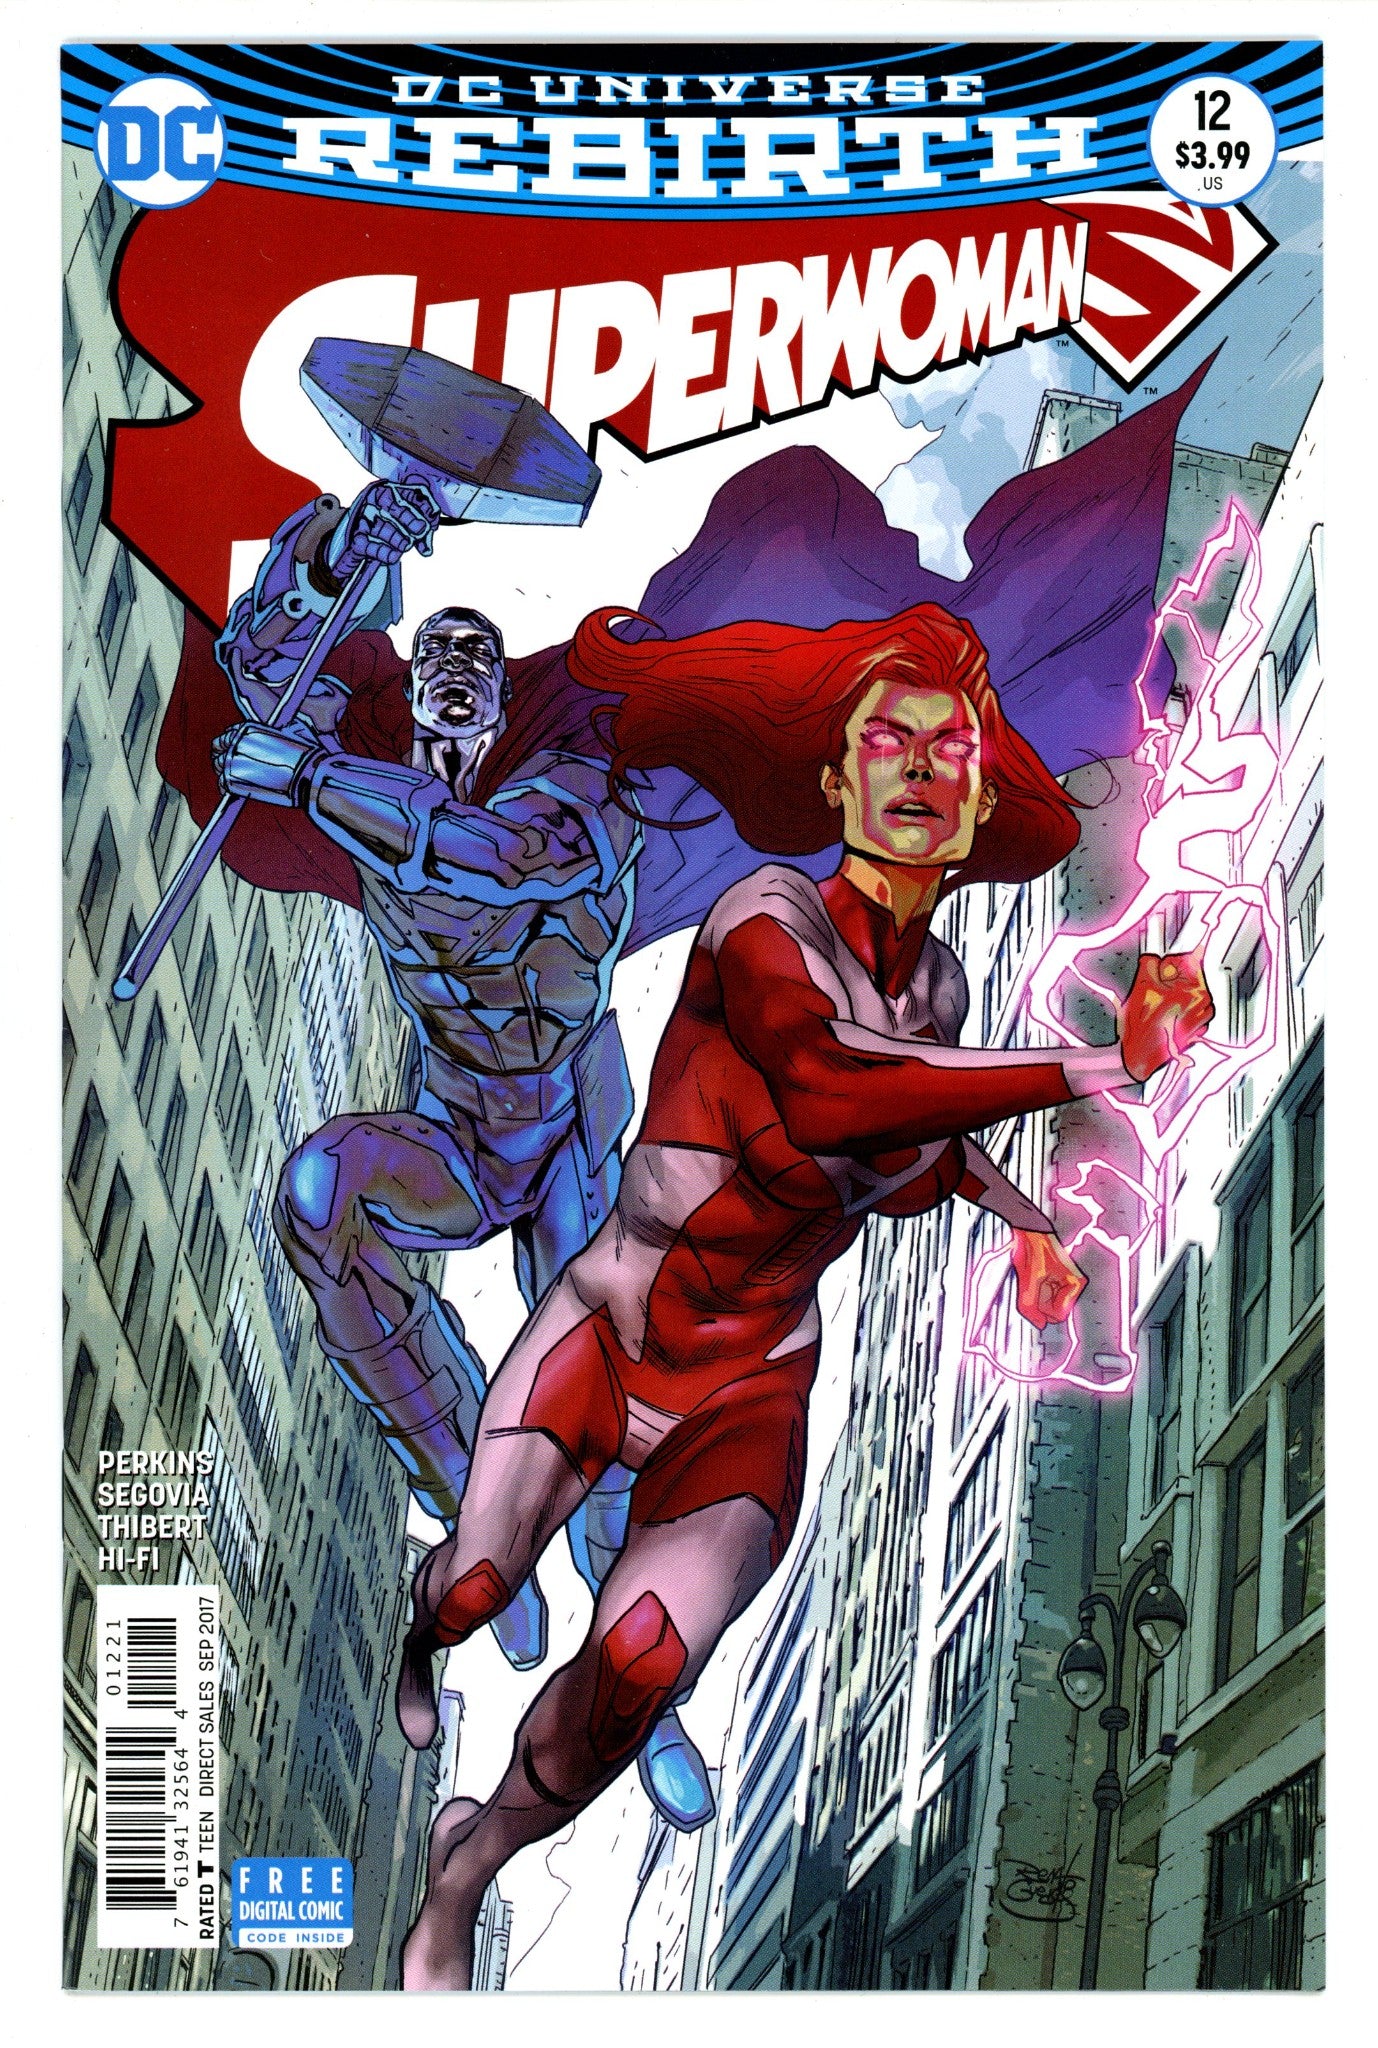 Superwoman Vol 1 12 High Grade (2017) Guedes Variant 